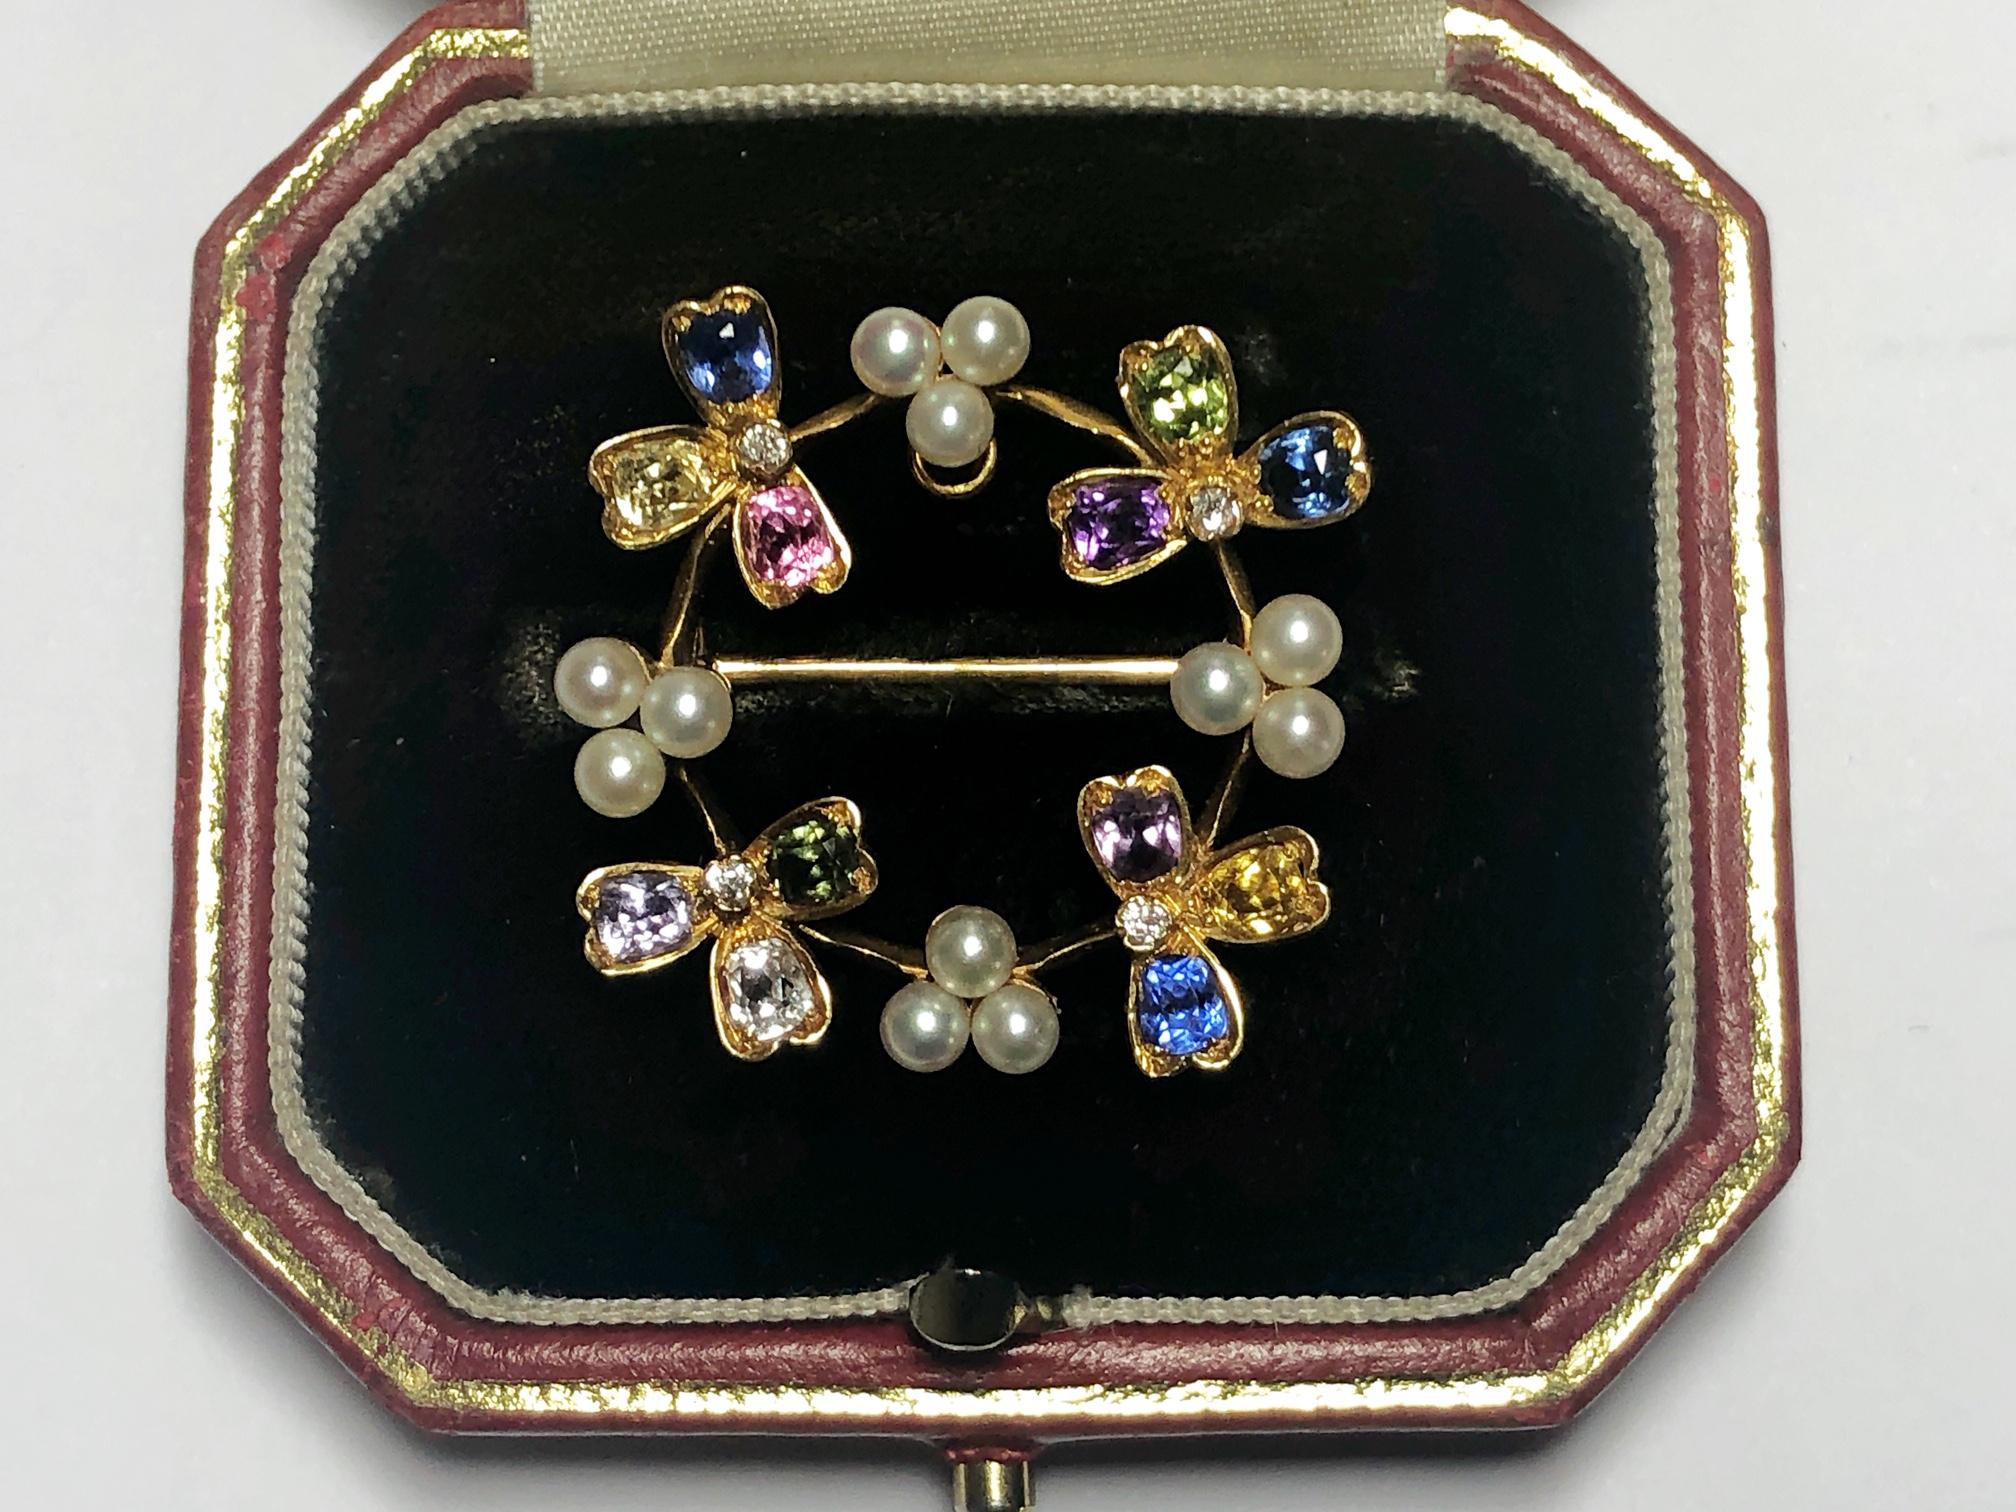 Vintage Tiffany & Co. Broche pendentif en or et perles serties de pierres précieuses, c. 1937 Bon état - En vente à London, GB